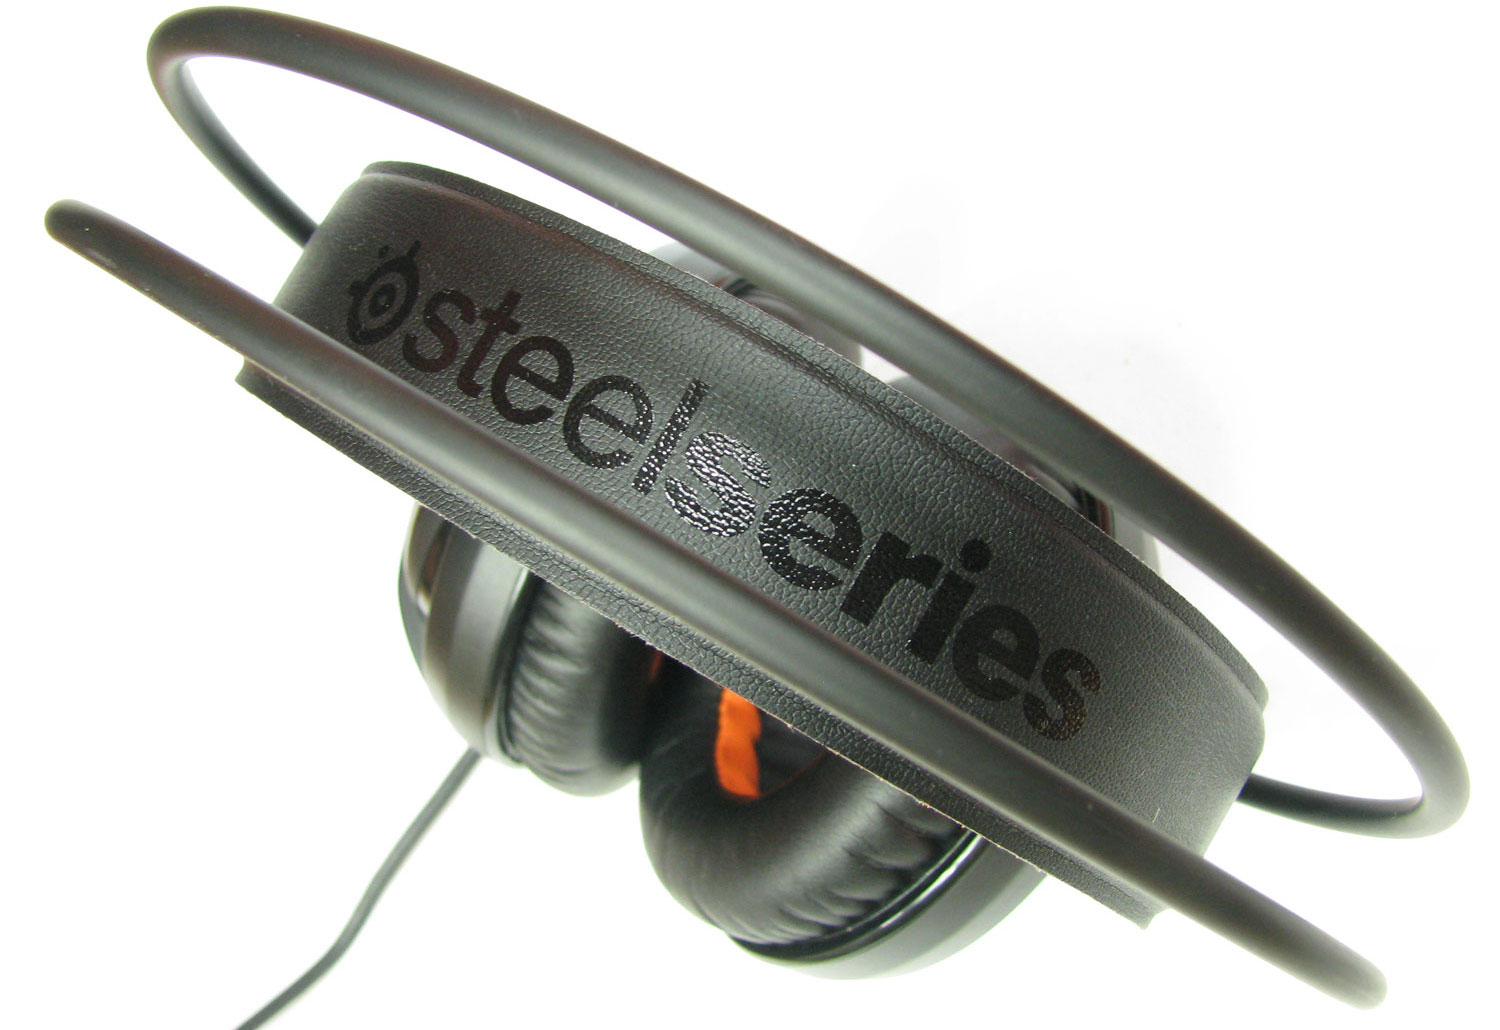 SteelSeries Siberia 350 - lekka konstrukcja to wielki plus słuchawek.